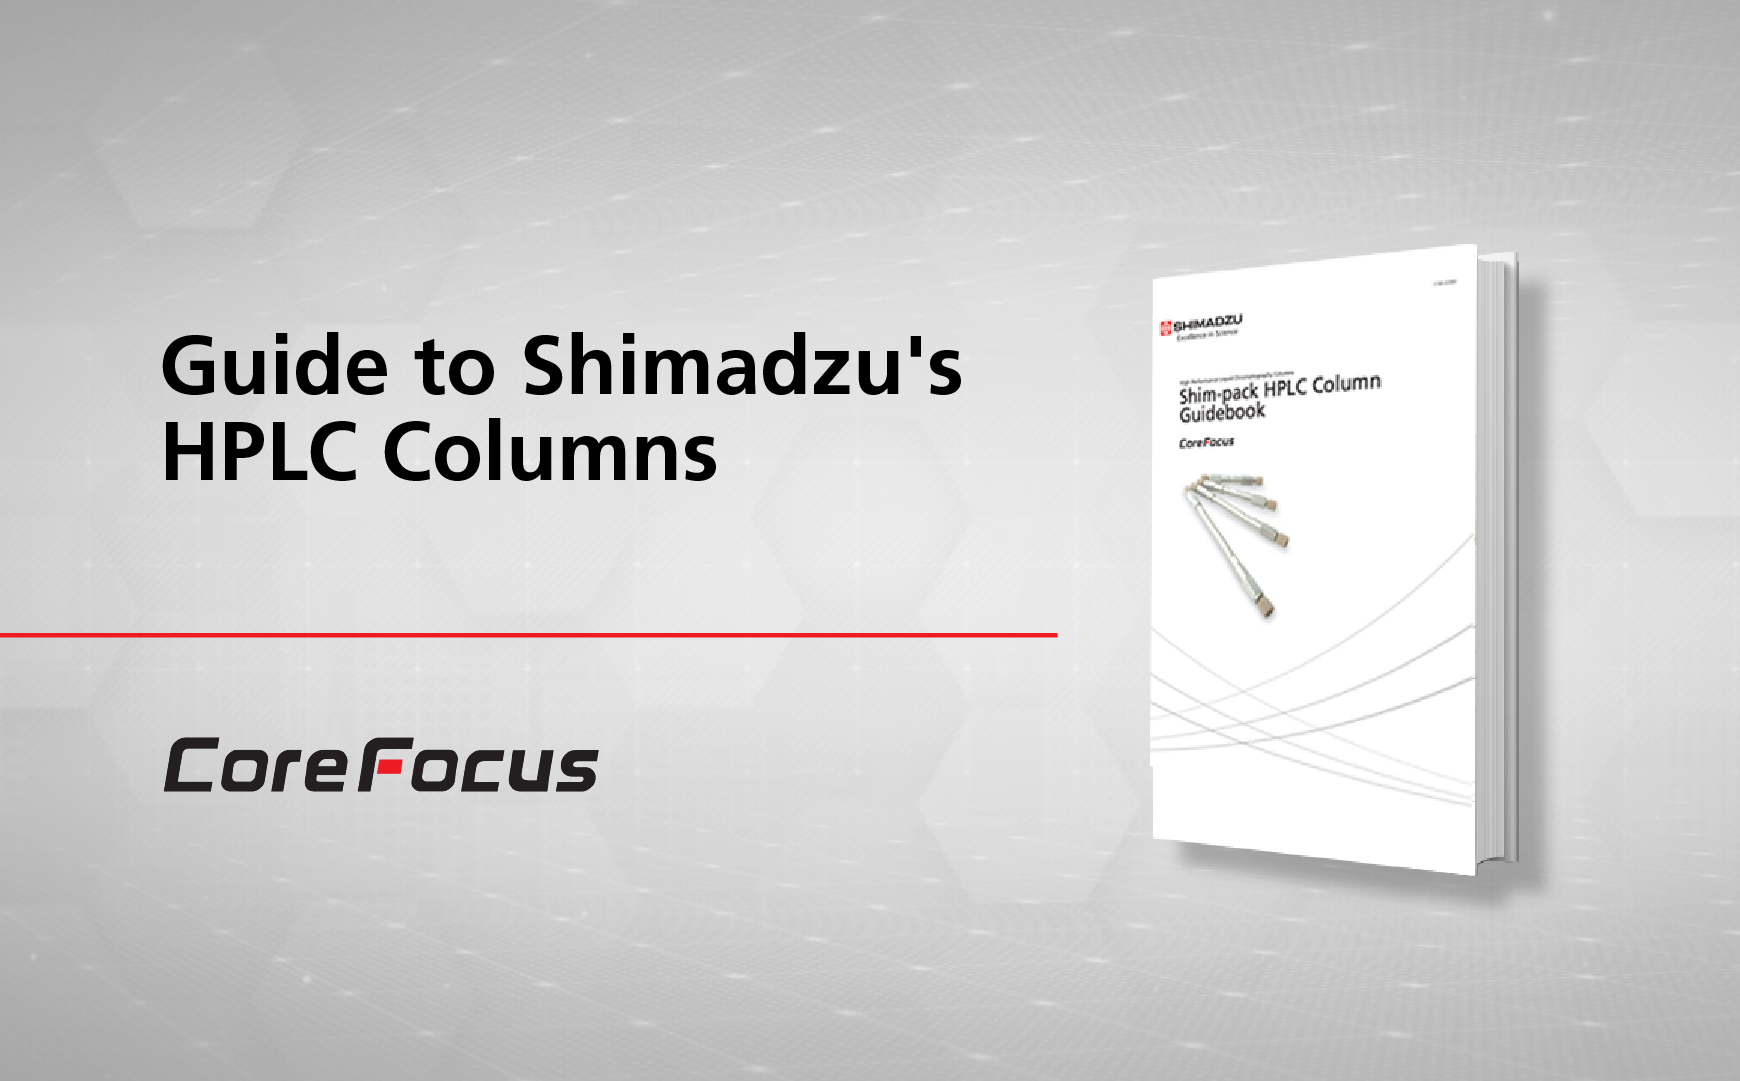 Guide to Shimadzu's HPLC Columns